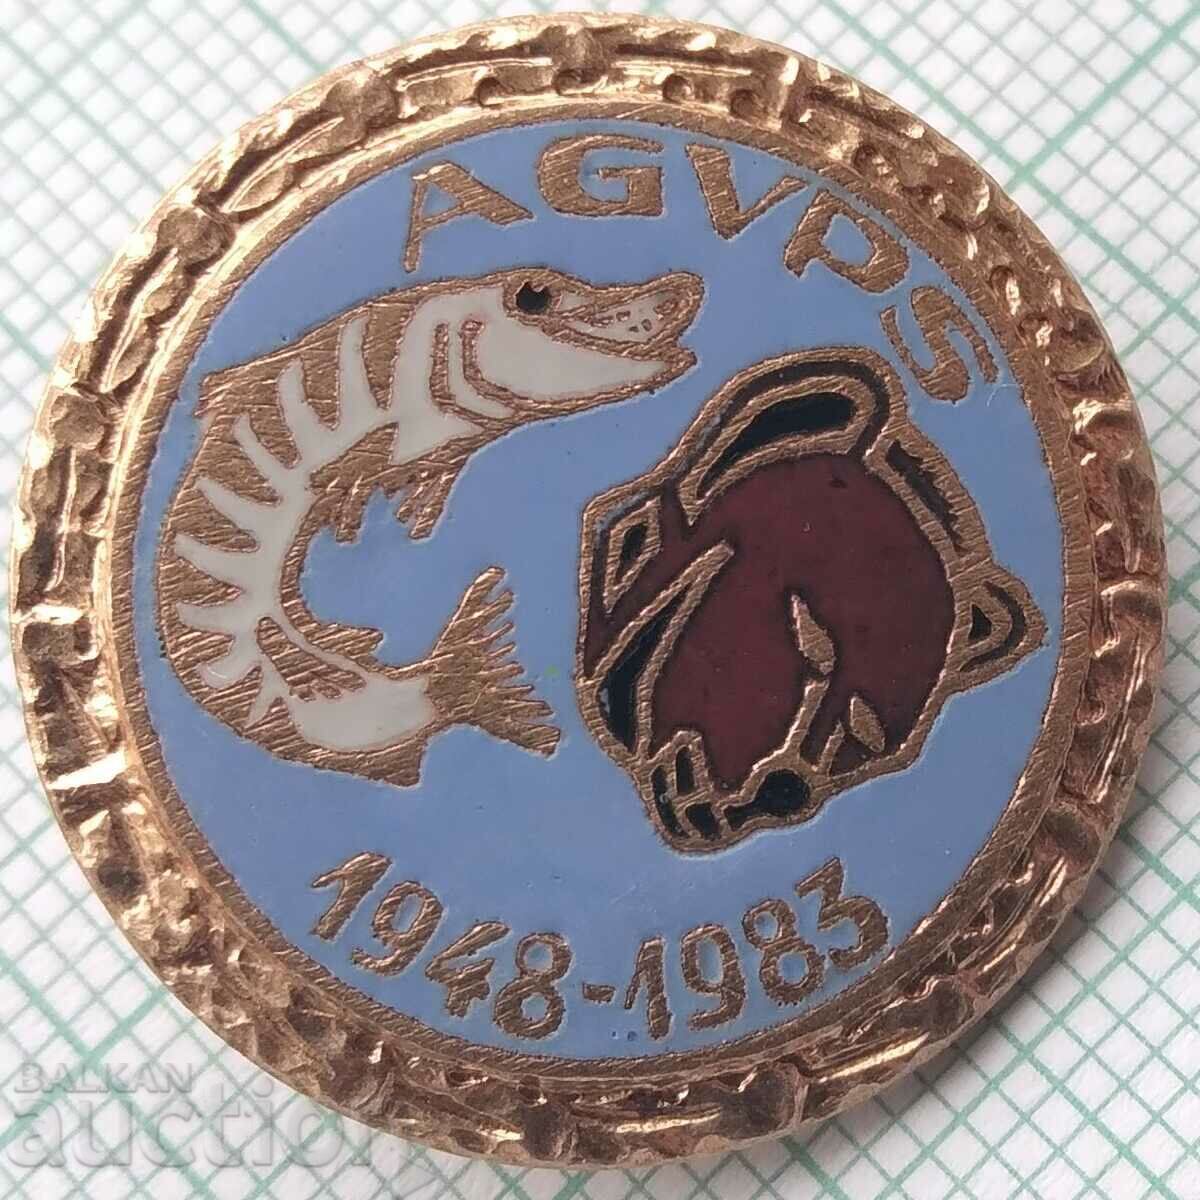 15734 Badge - Hunting Fishing Union Romania 1983 - σμάλτο